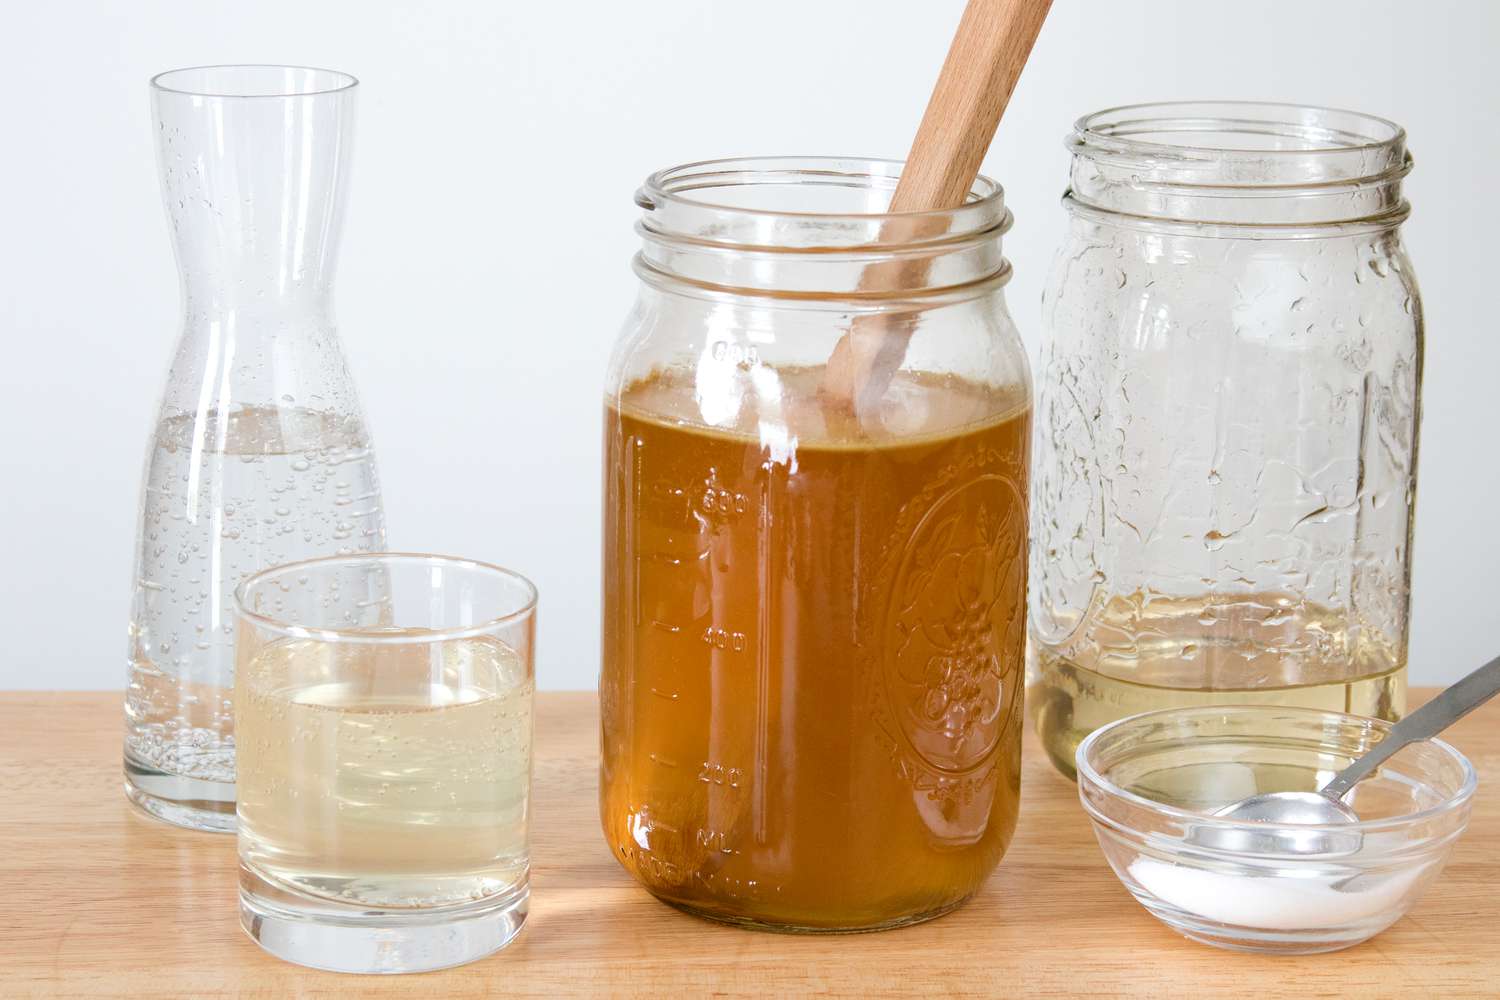 Making Homemade Tonic Water Without Cinchona